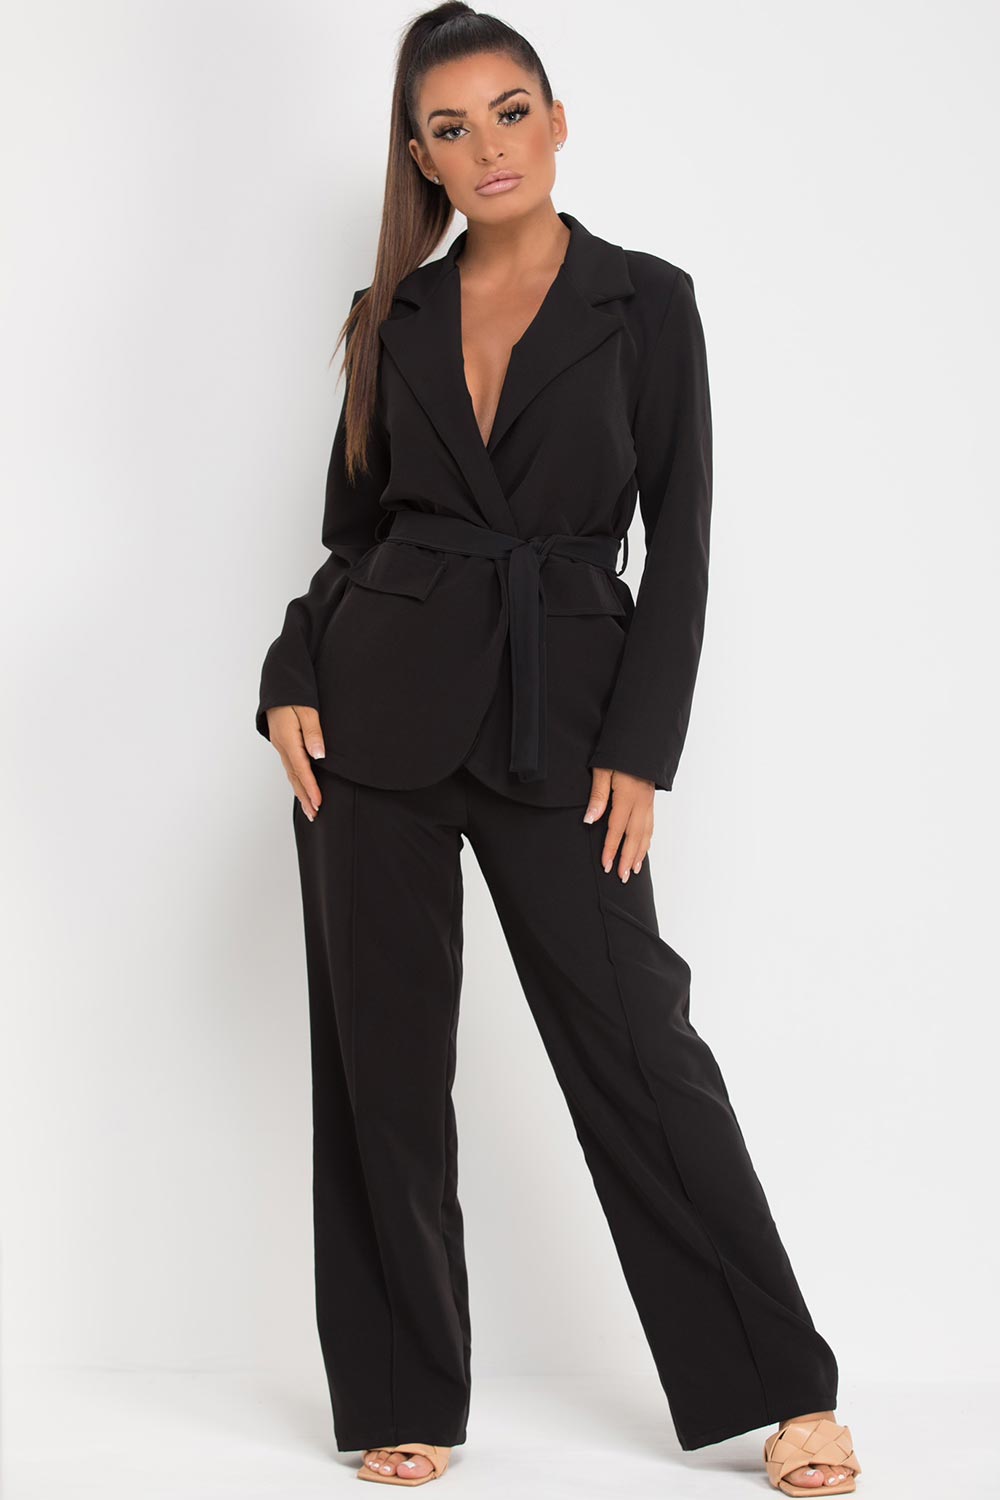 Black Bell Bottom Pants Suit Set With Blazer, Puffed Sleeve Blazer for Women,  Black Trouser Set for Women, Black Pants Suit Set Womens -  Canada